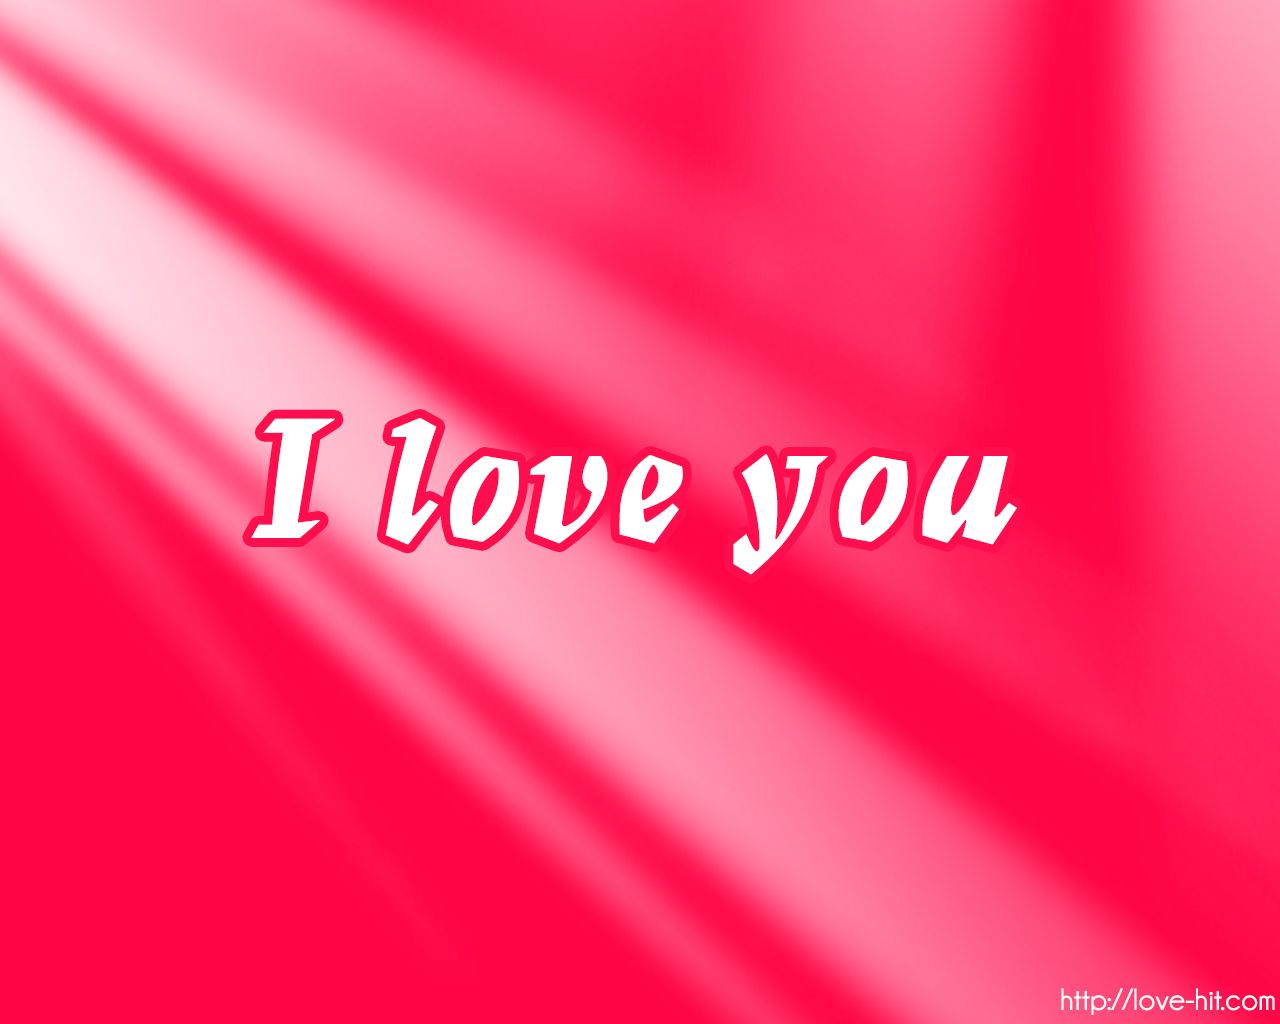 I-love-you-pink-ray.jpg